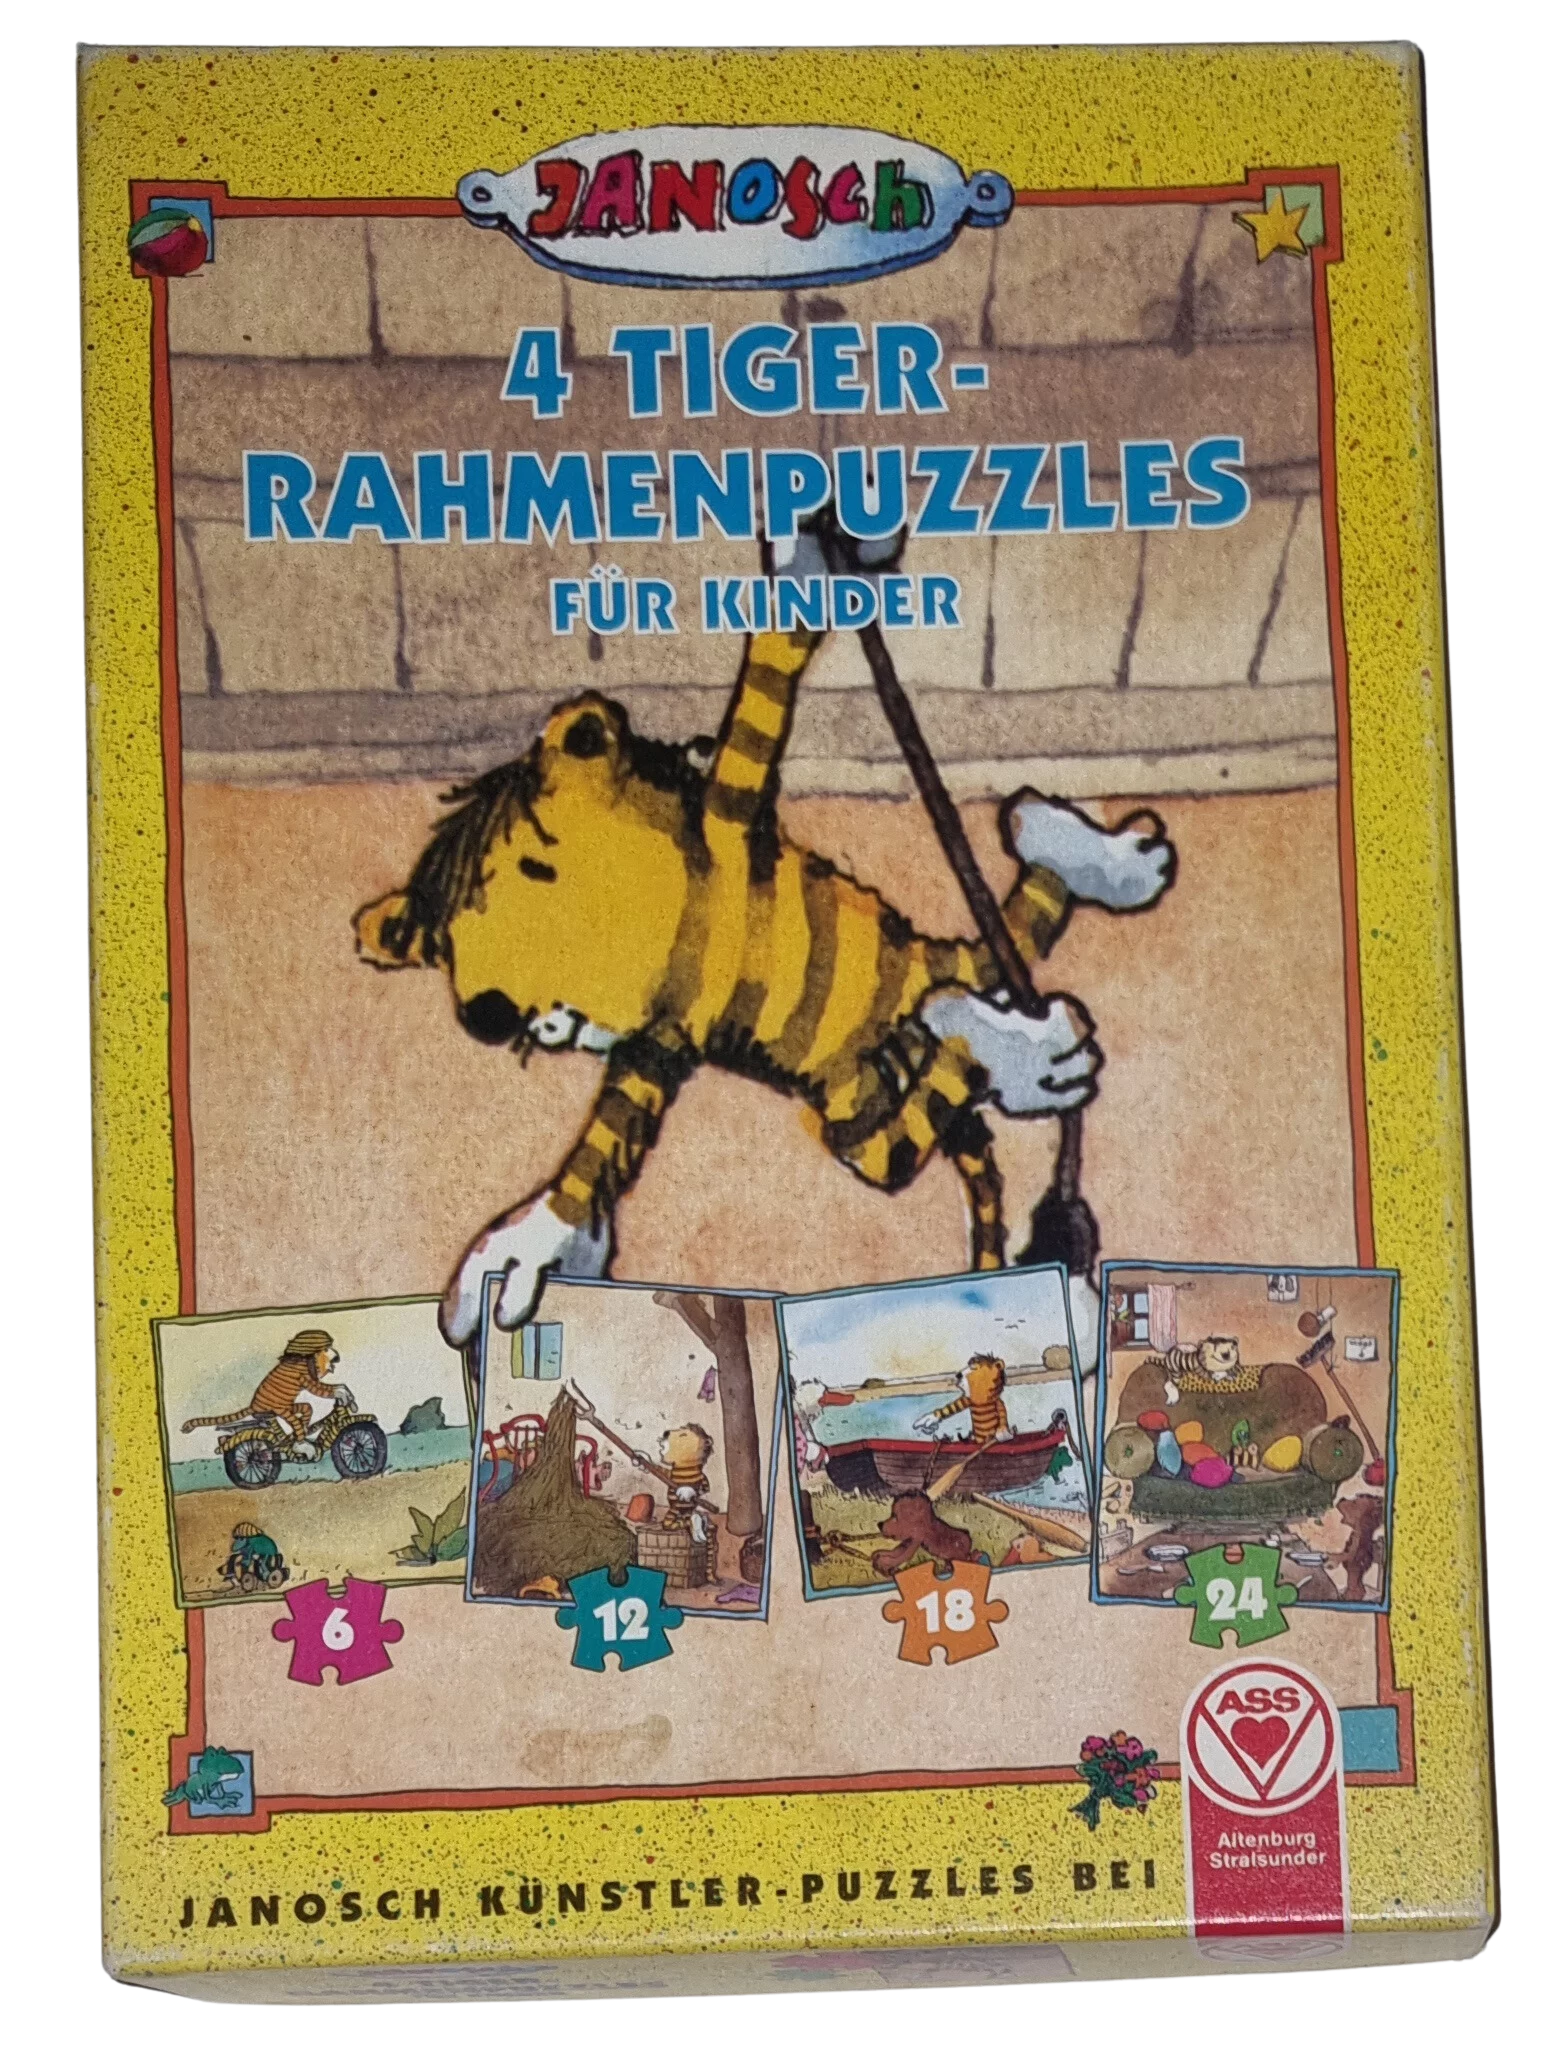 ASS Puzzle 4 Tiger-Rahmenpuzzles für Kinder Janosch